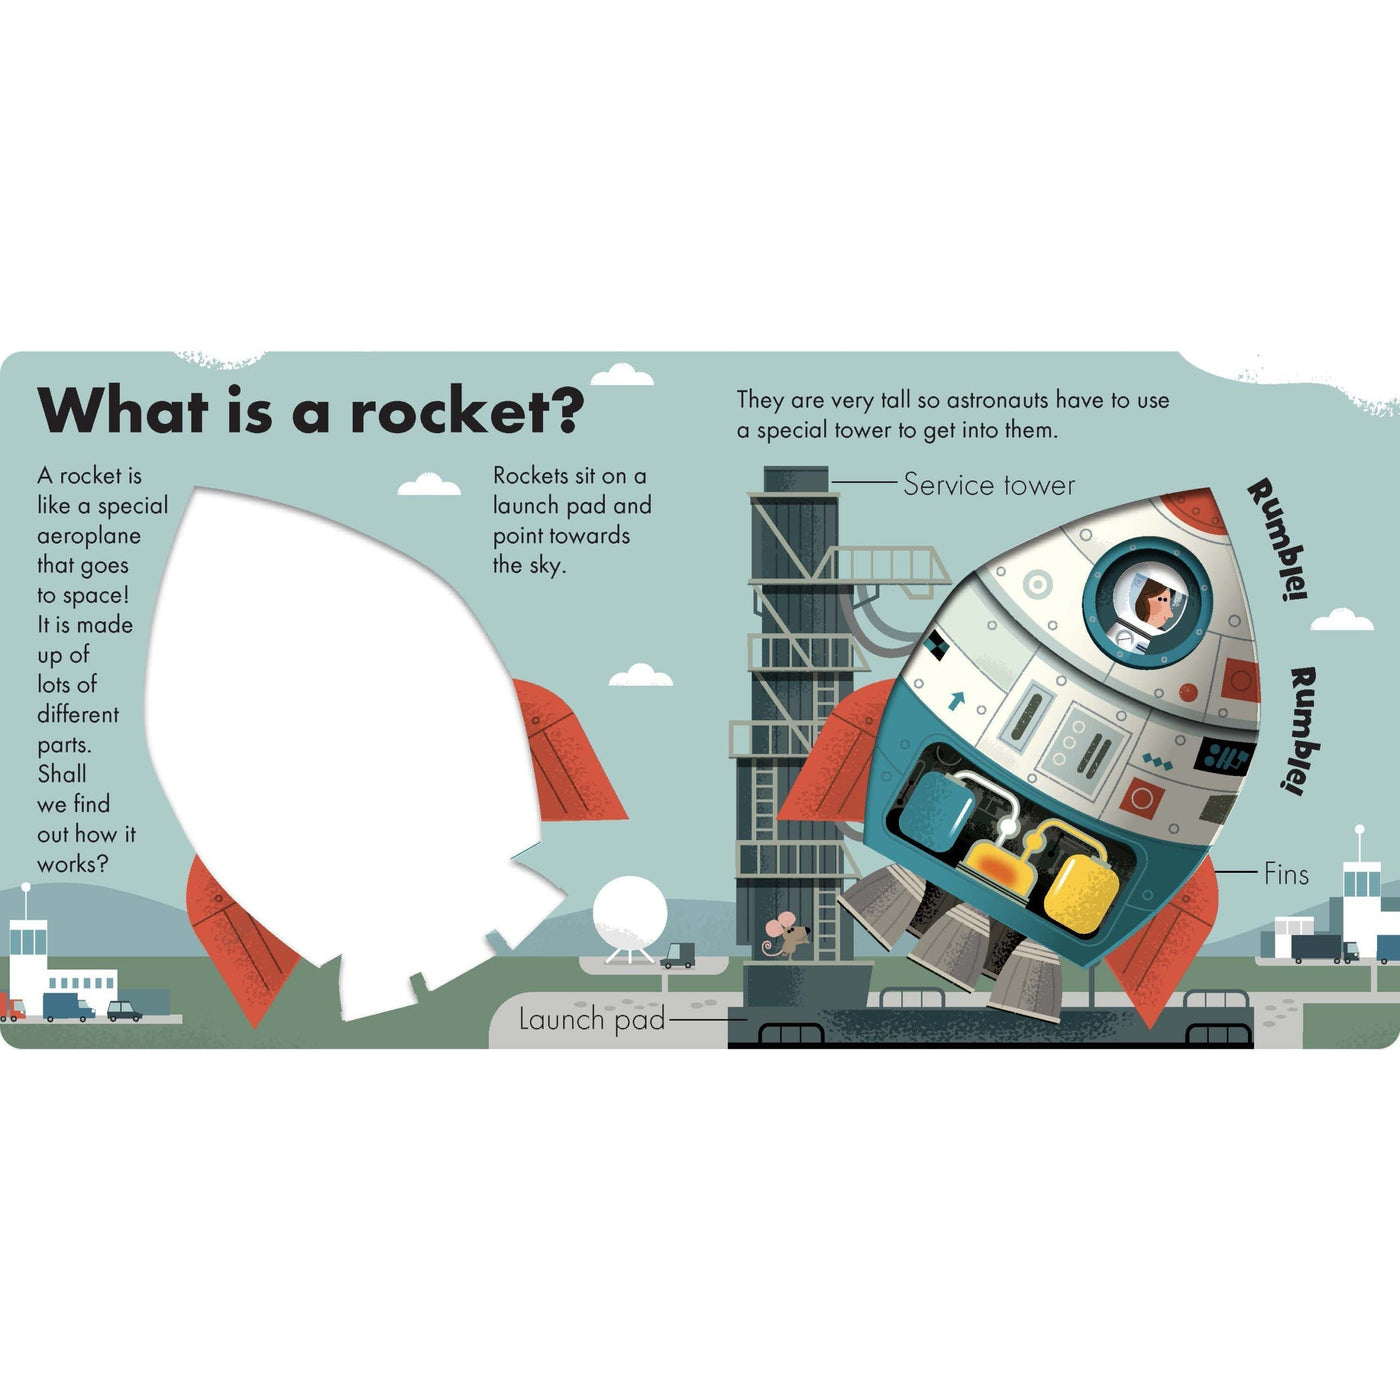 How It Works: Rocket - Amelia Hepworth & David Semple